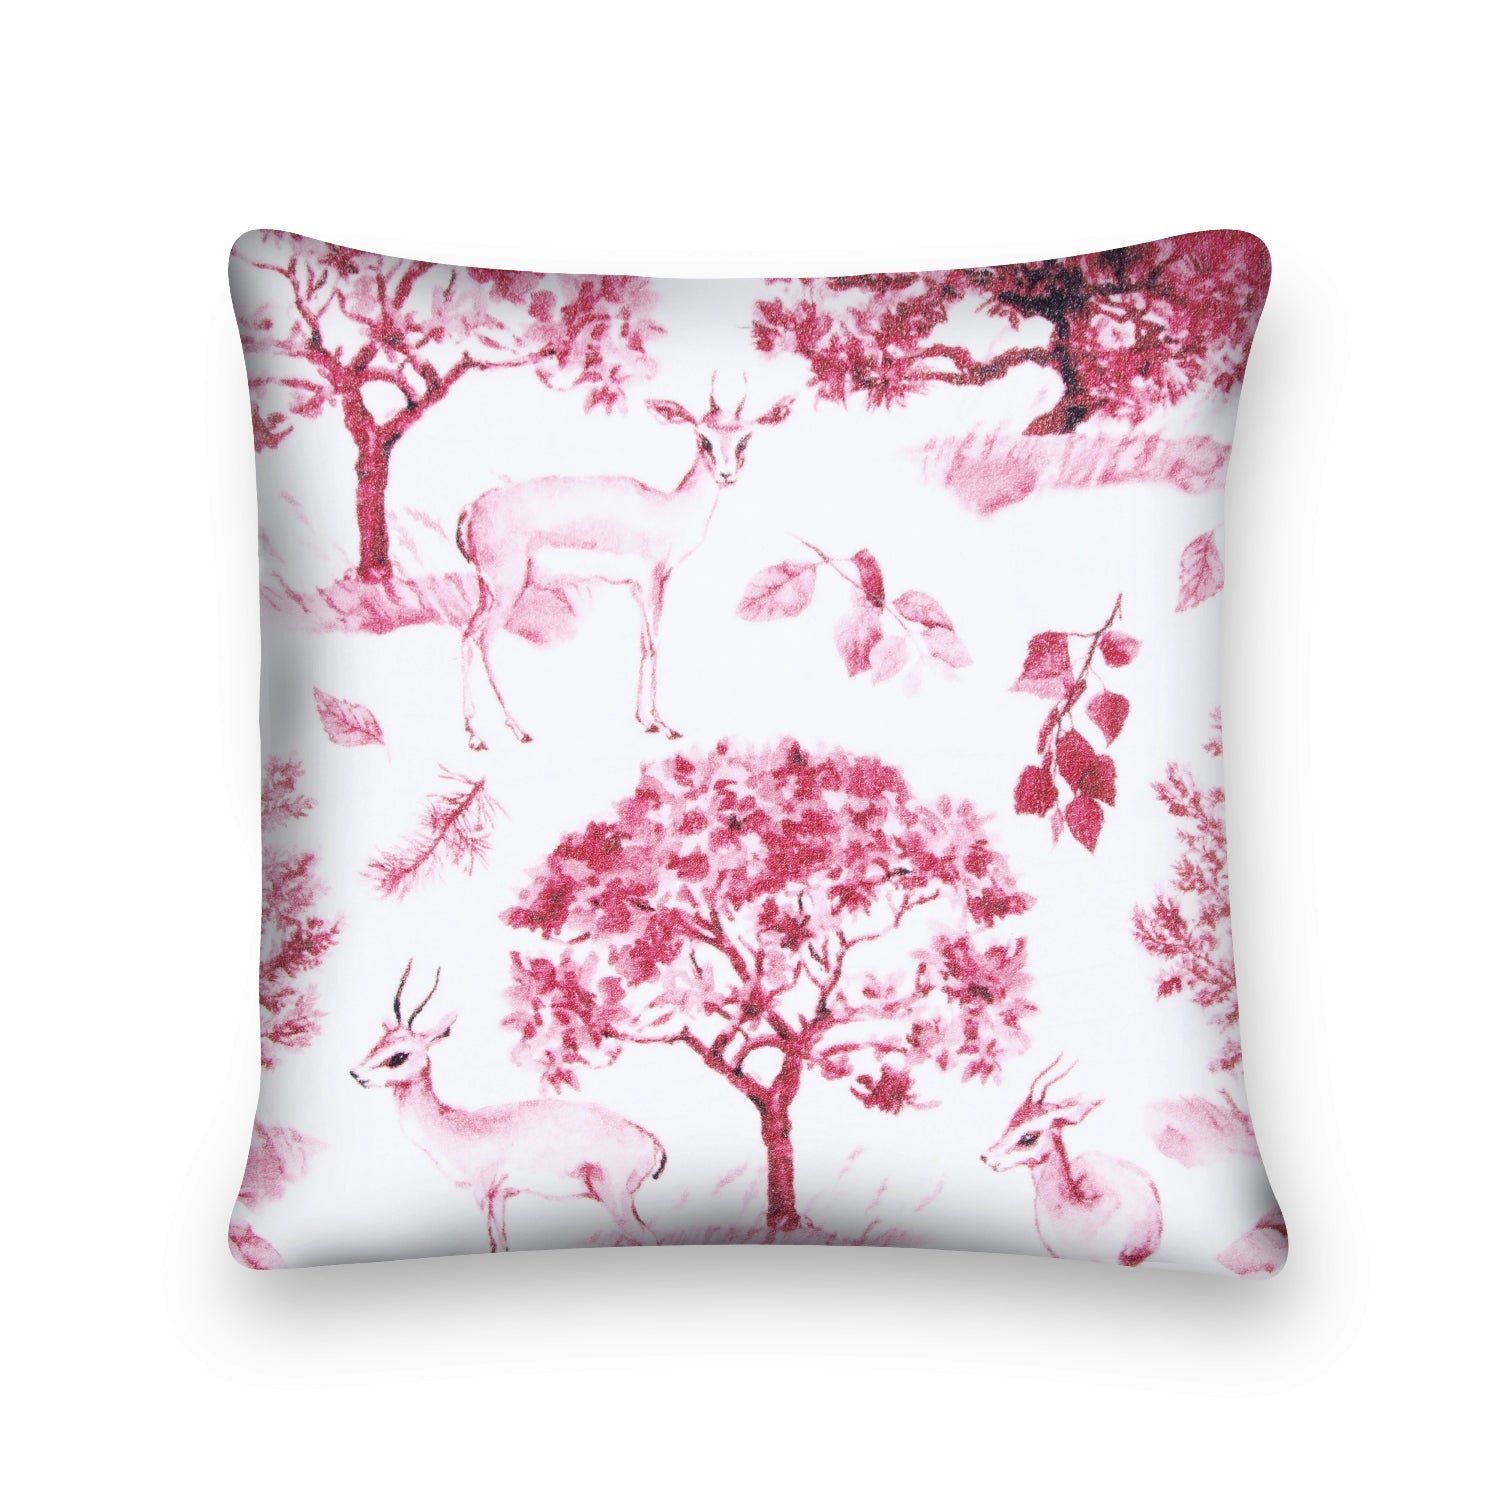 'Forest Dreams' 100% Cotton Velvet Cushion Cover